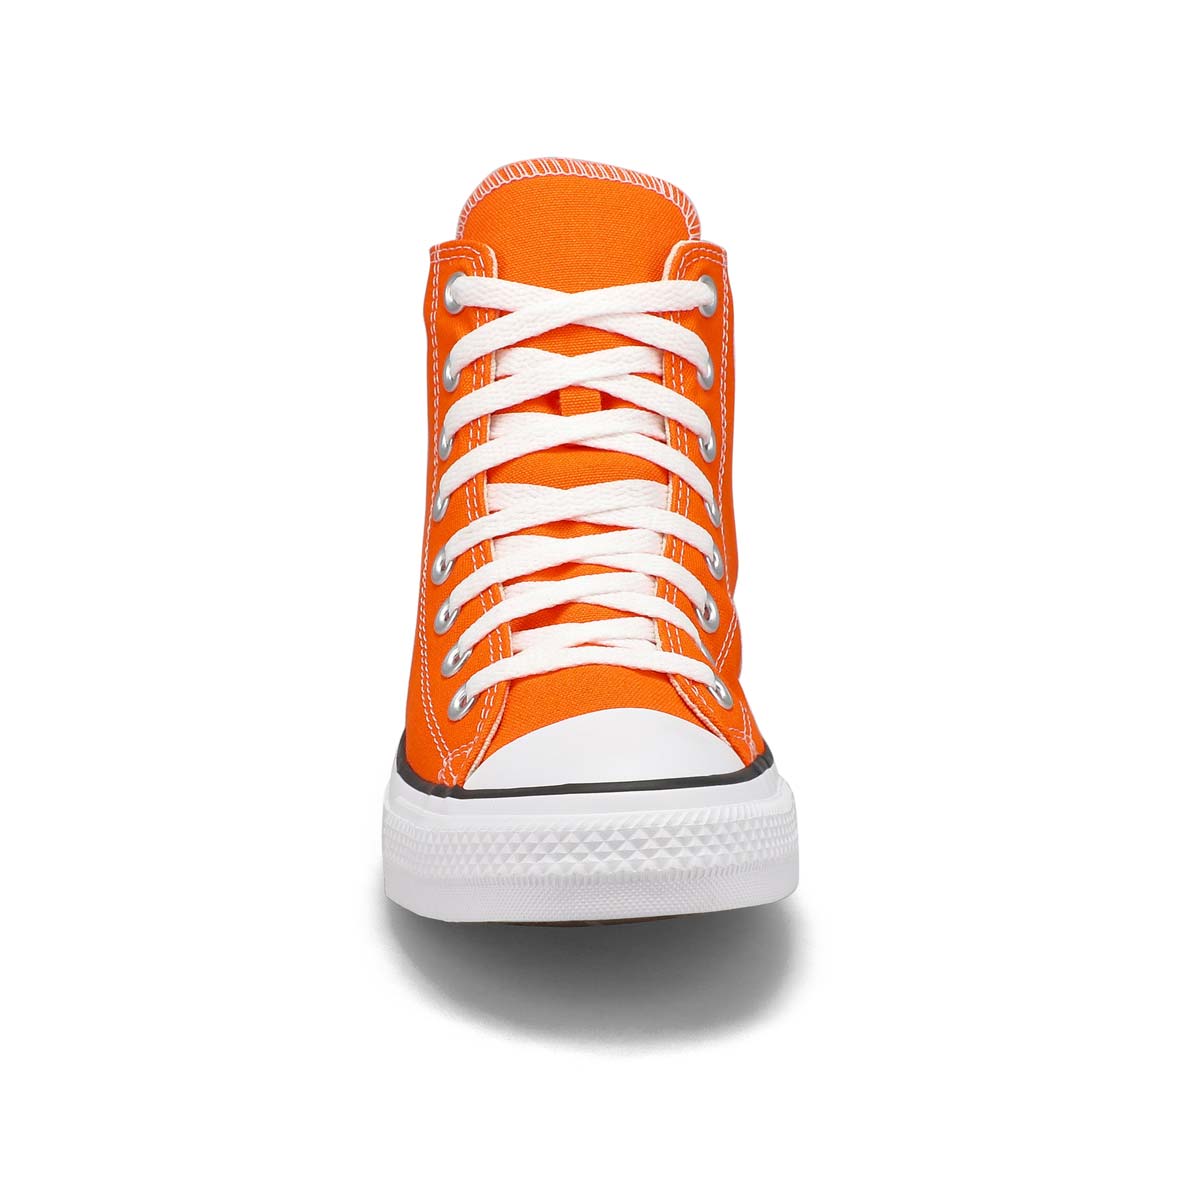 Converse Lds CTAS Hi Sneaker - Orange 